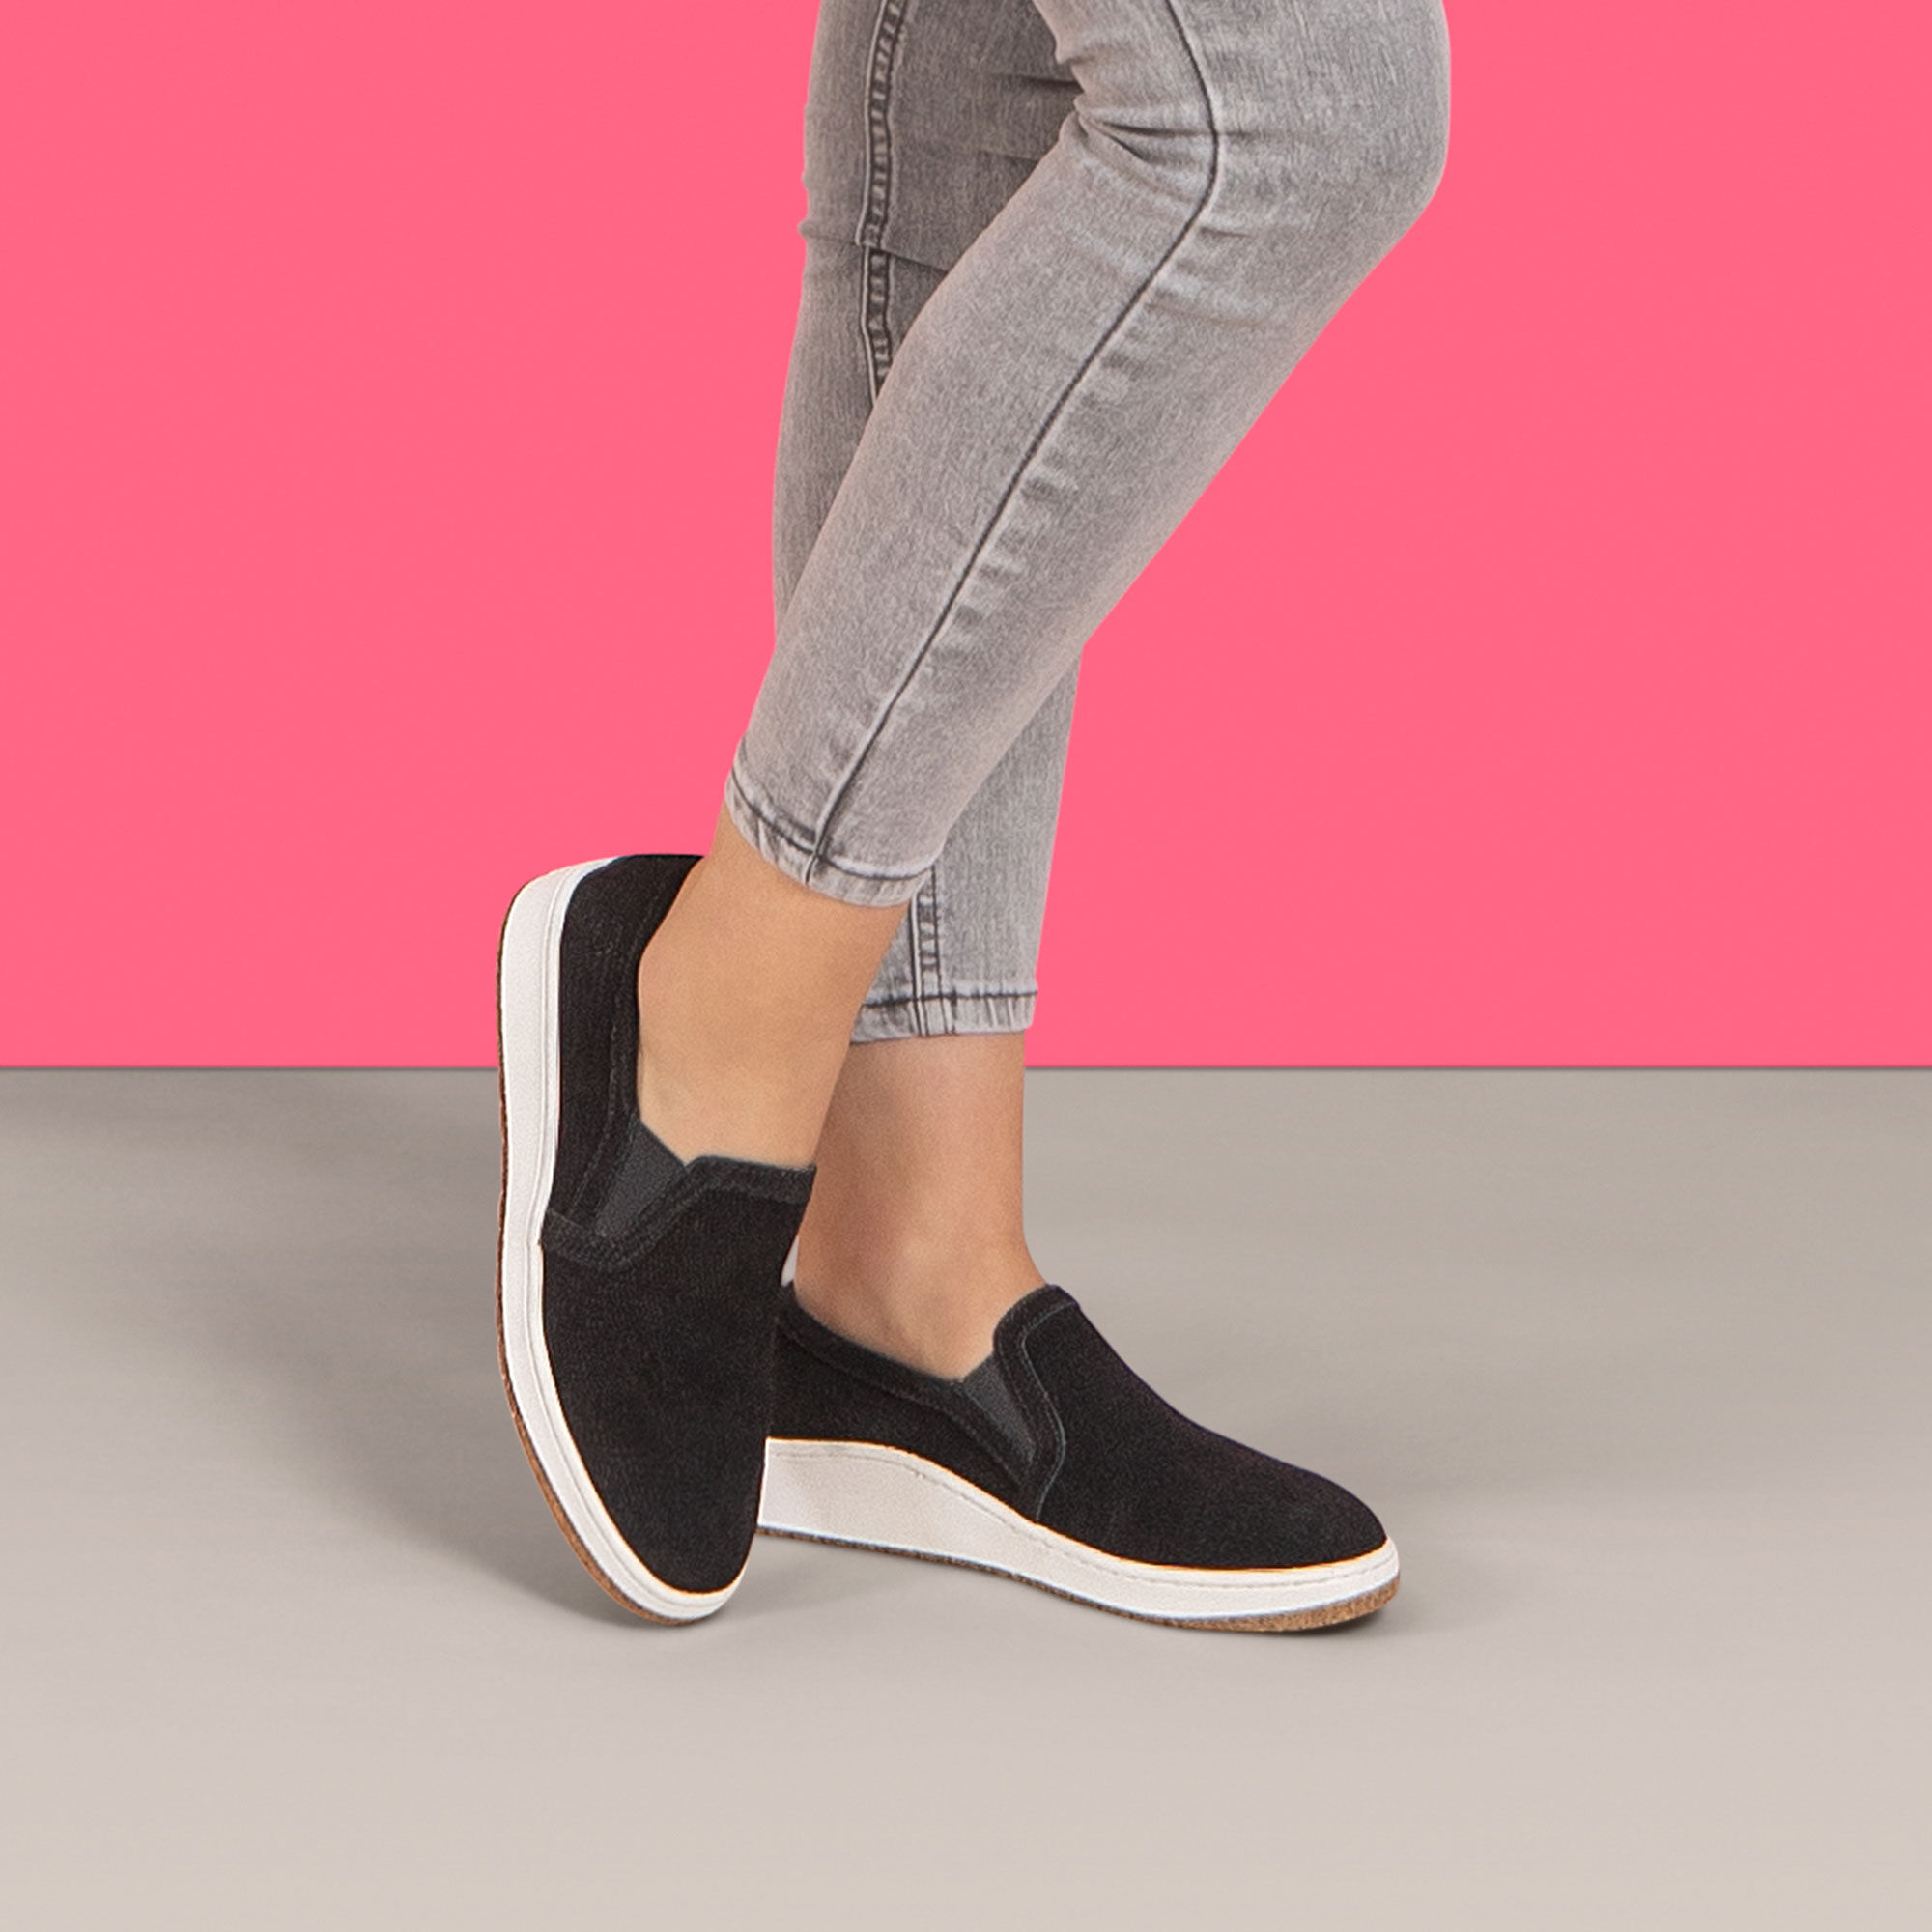 Kenzie Slip-On Comfort Sneaker-Black Croc